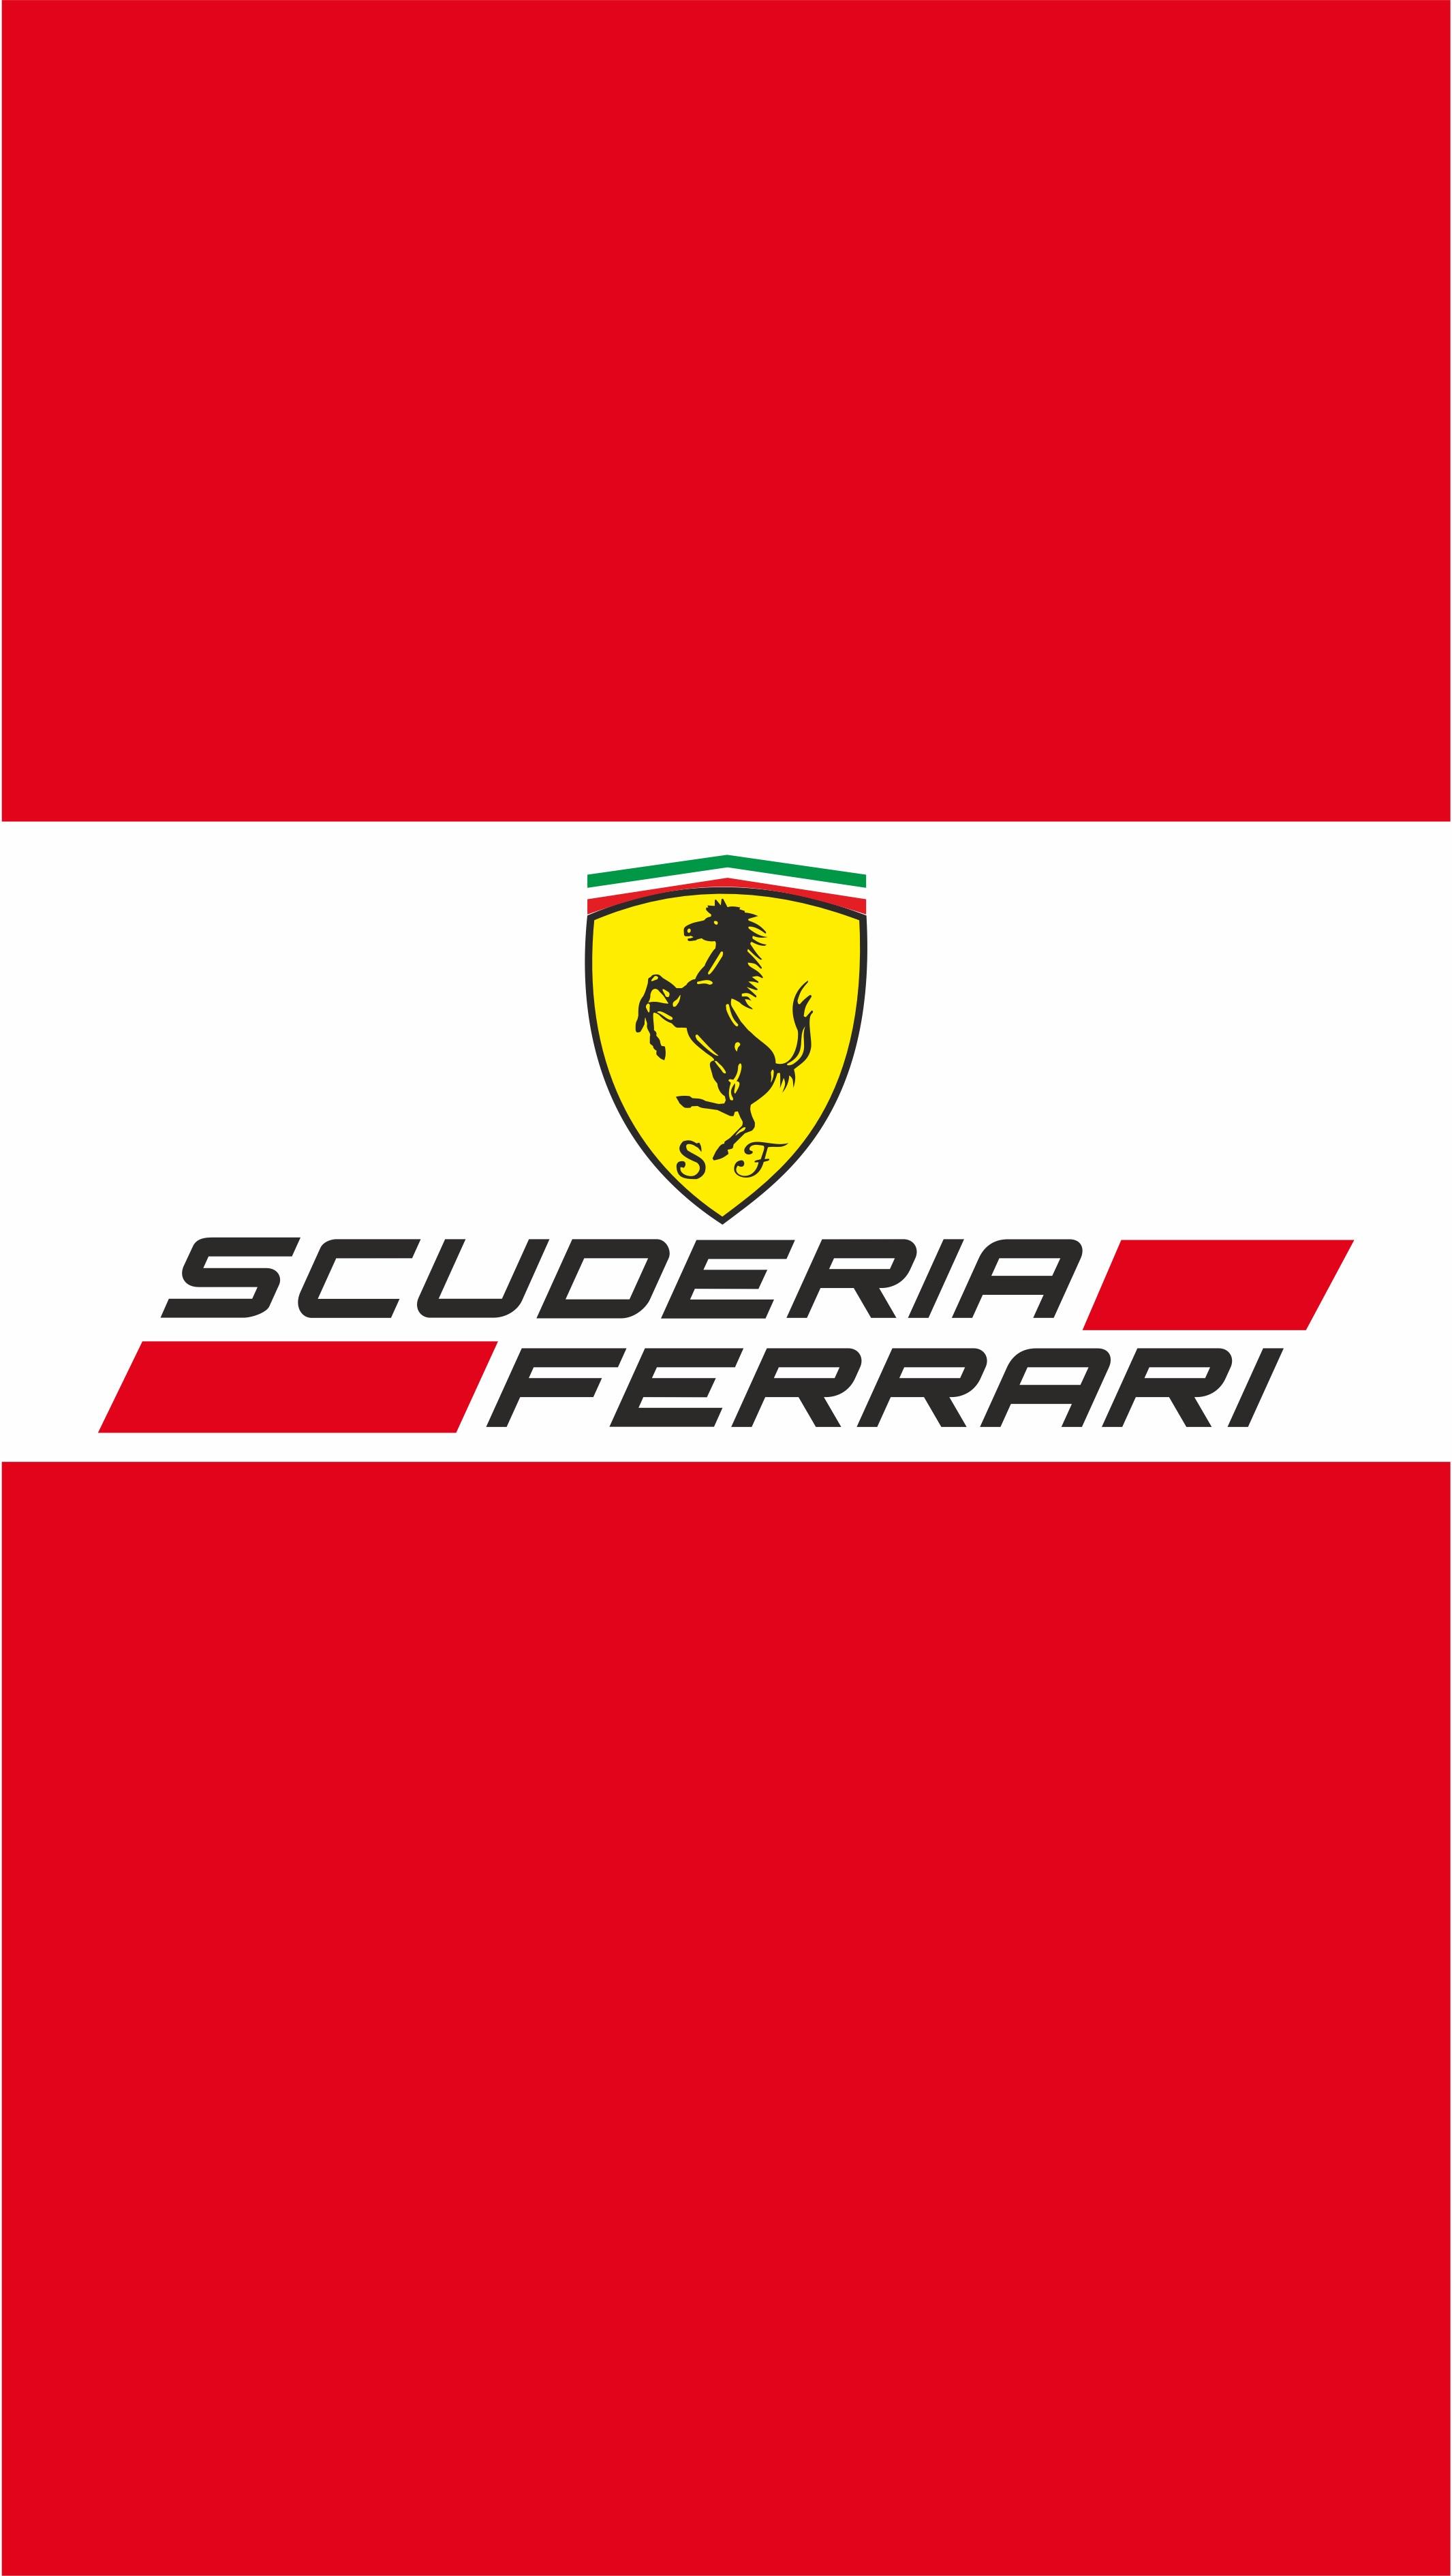 Ferrari Scuderia Wallpapers